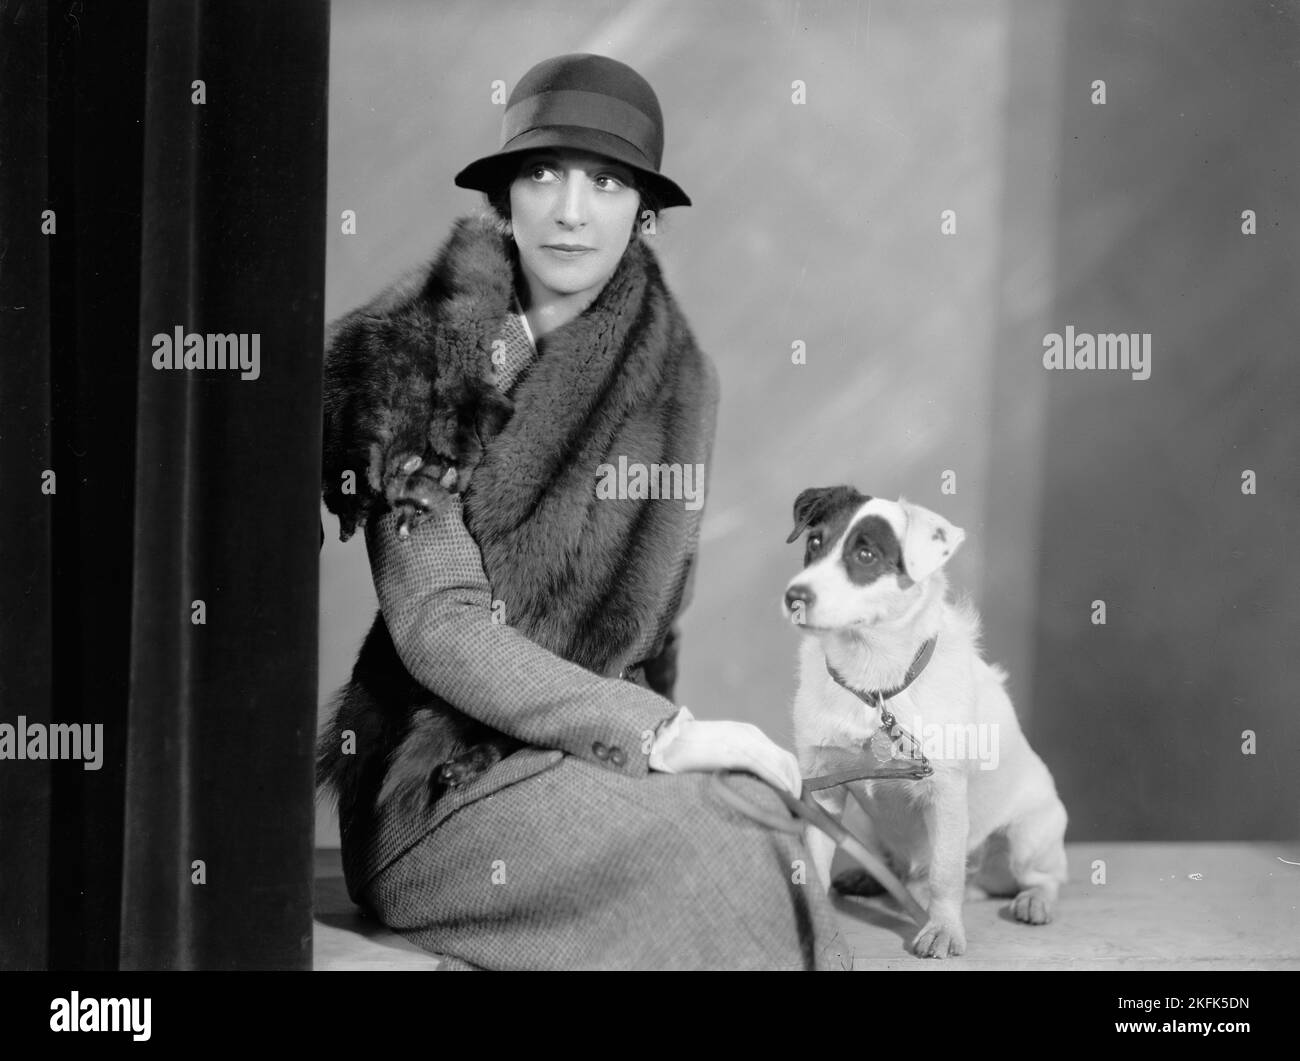 Дама с собачкой содержание по главам. Дама с собачкой 1960. Дама с собачкой фотосессия. Дама с собачкой ретро. Современная дама с собачкой.